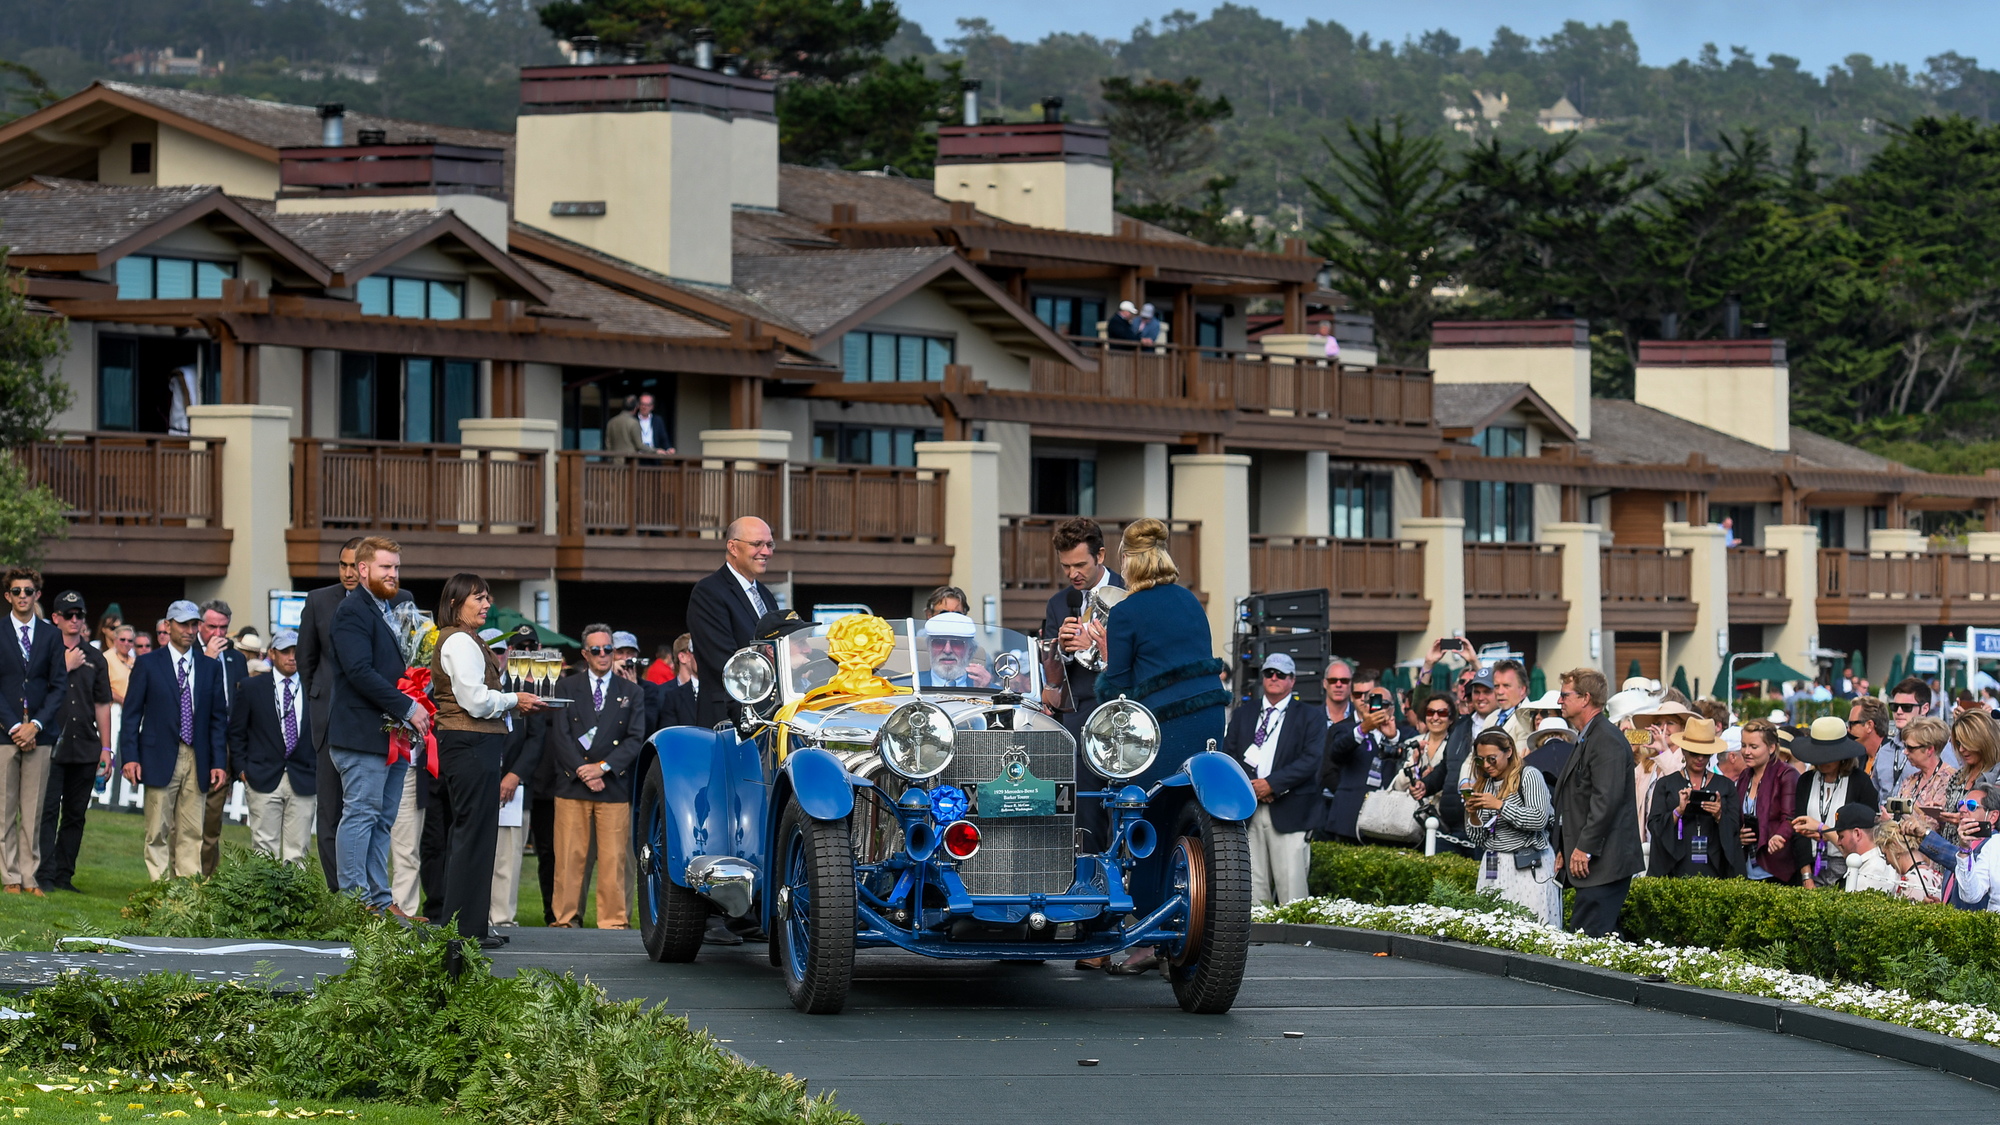 1929 Mercedes-Benz S Barker Tourer, 2017 Pebble Beach Concours d'Elegance Best in Show